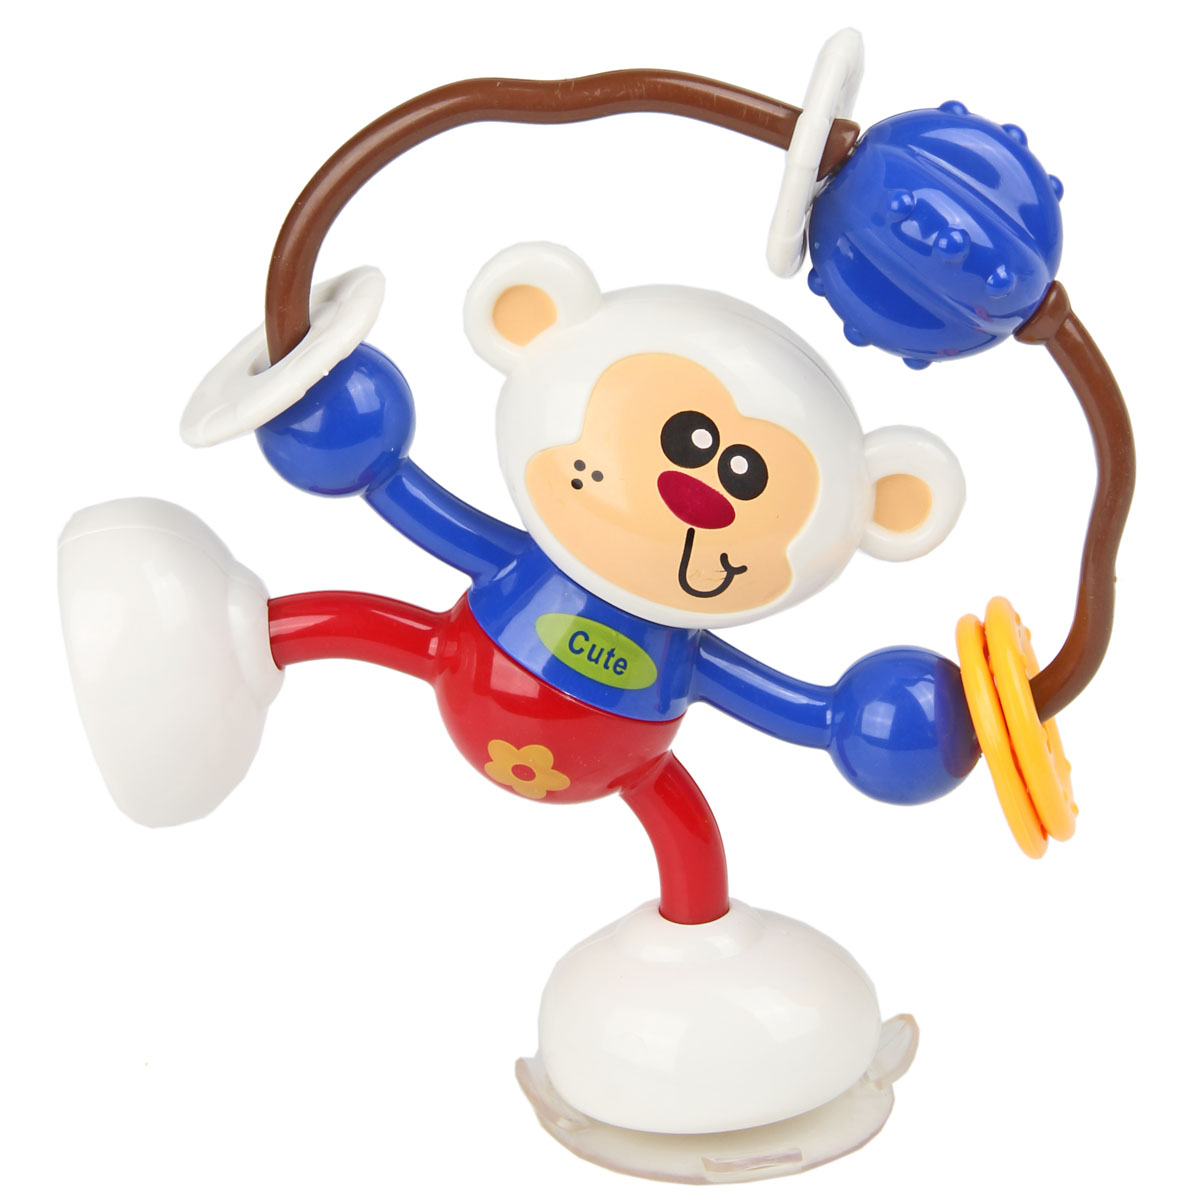 Развивающая игрушка Ути Пути обезьянка крутилка - фото 1